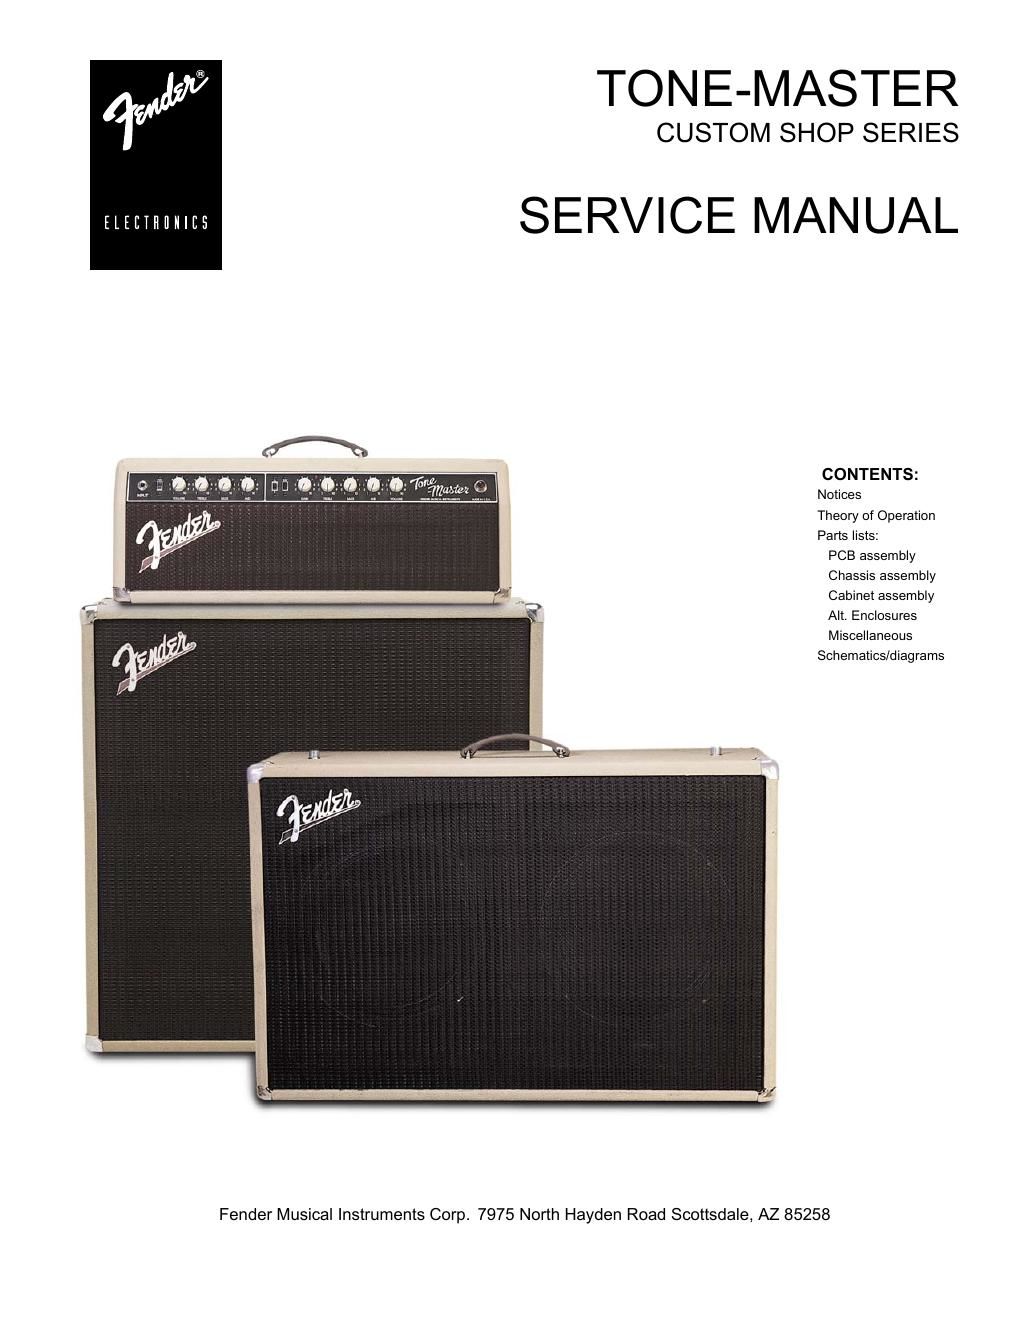 fender tonemaster service manual